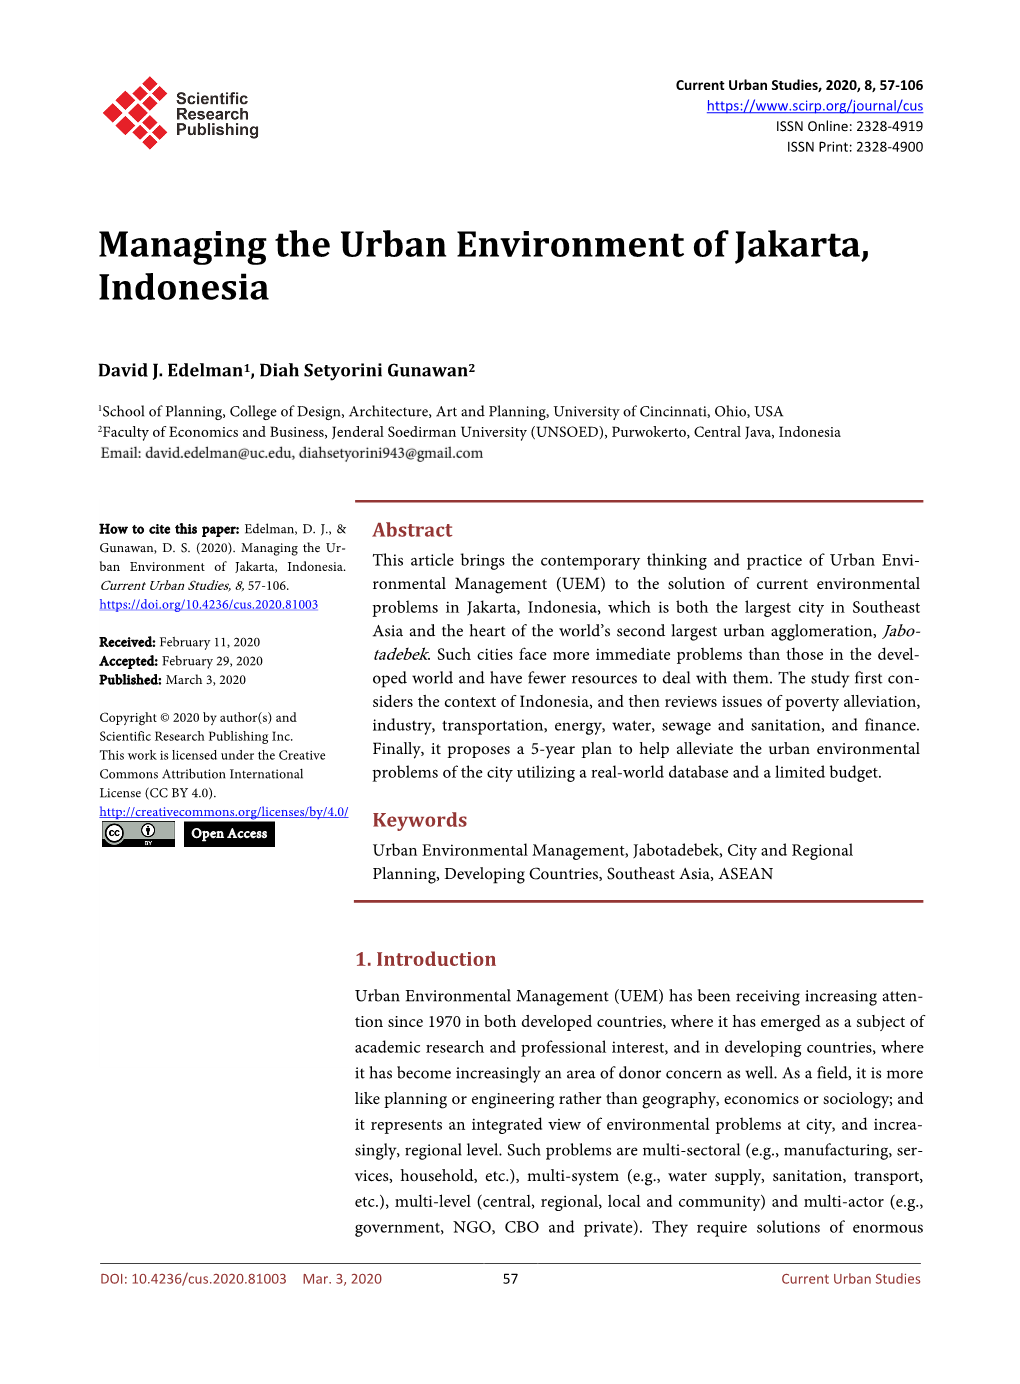 Managing the Urban Environment of Jakarta, Indonesia